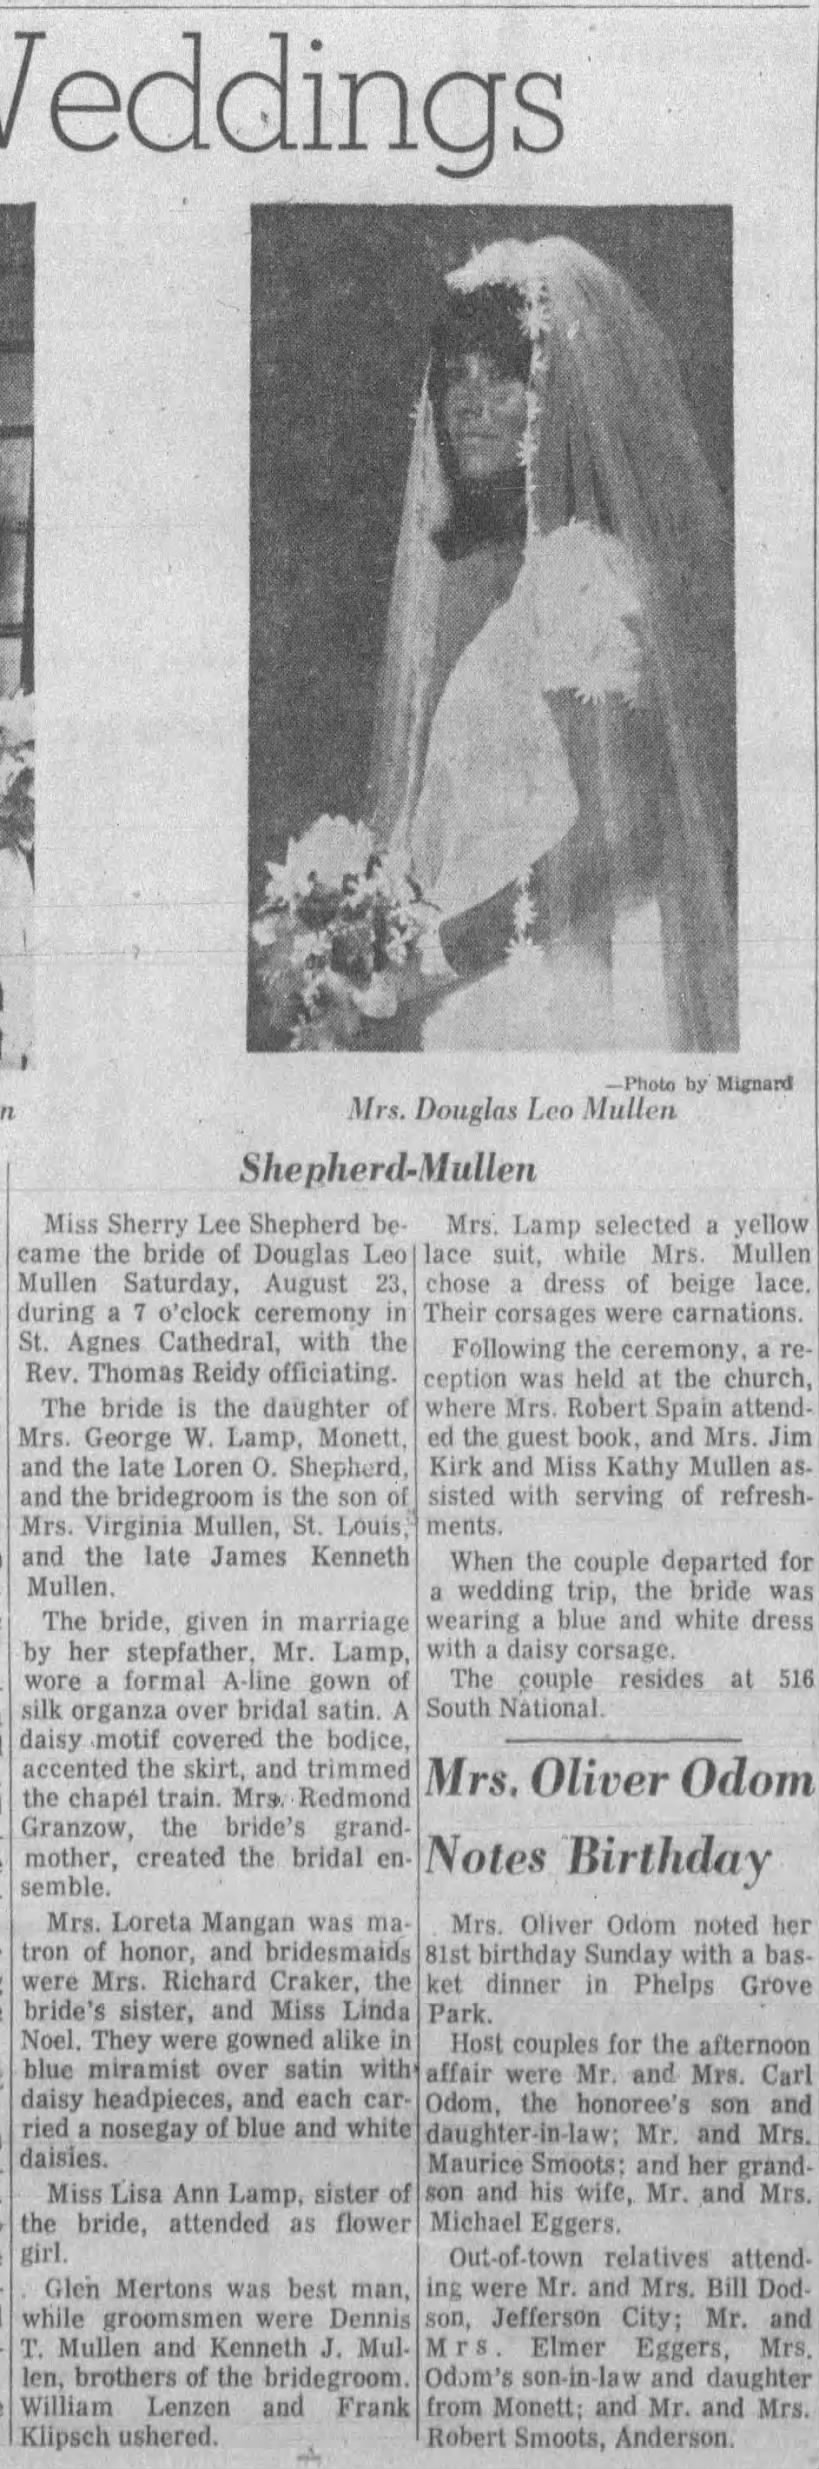 Marriage - Douglas Leo Mullen to Sherry Lee Shepherd